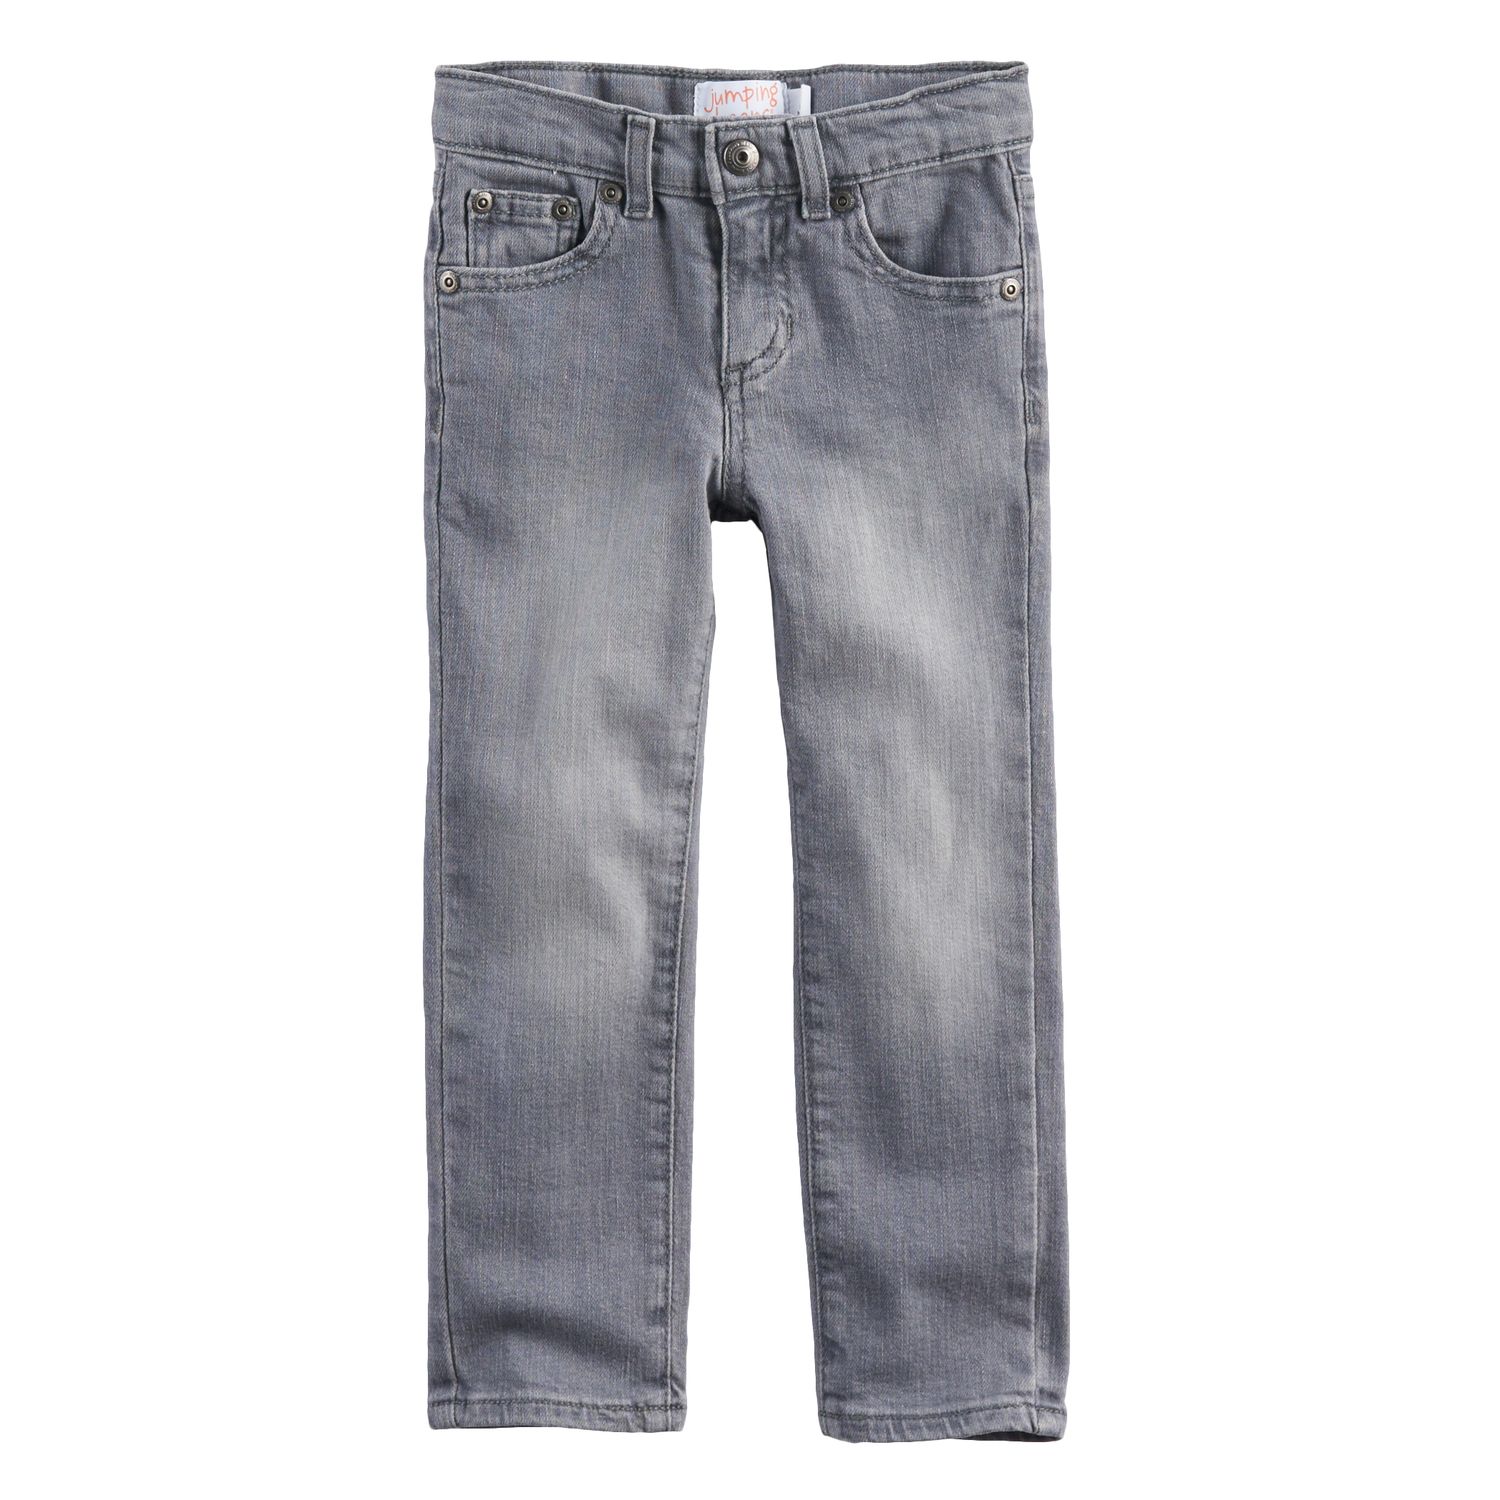 boys gray jeans